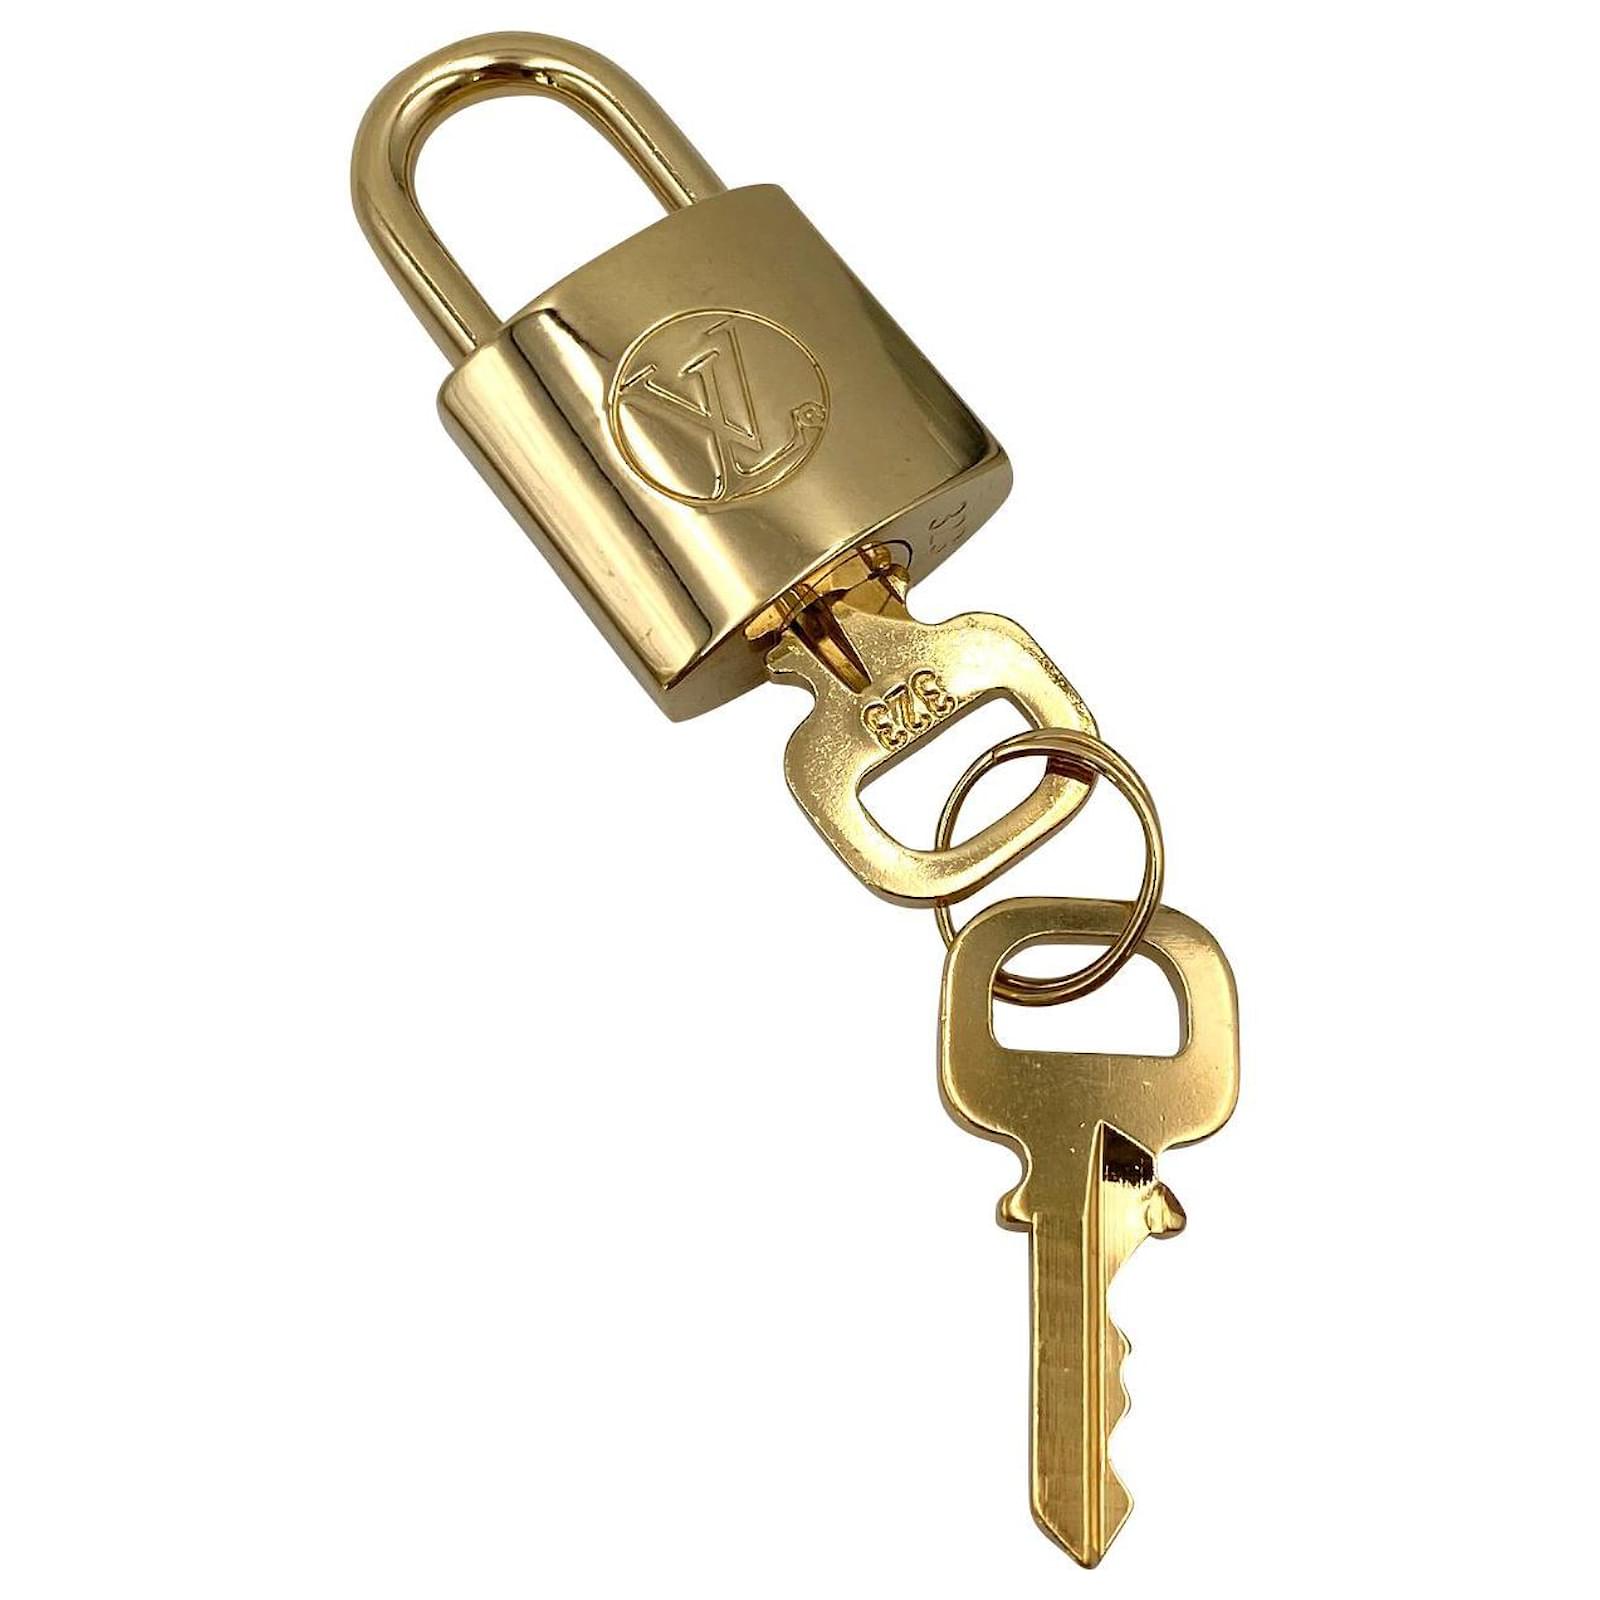 louis vuitton padlock and key